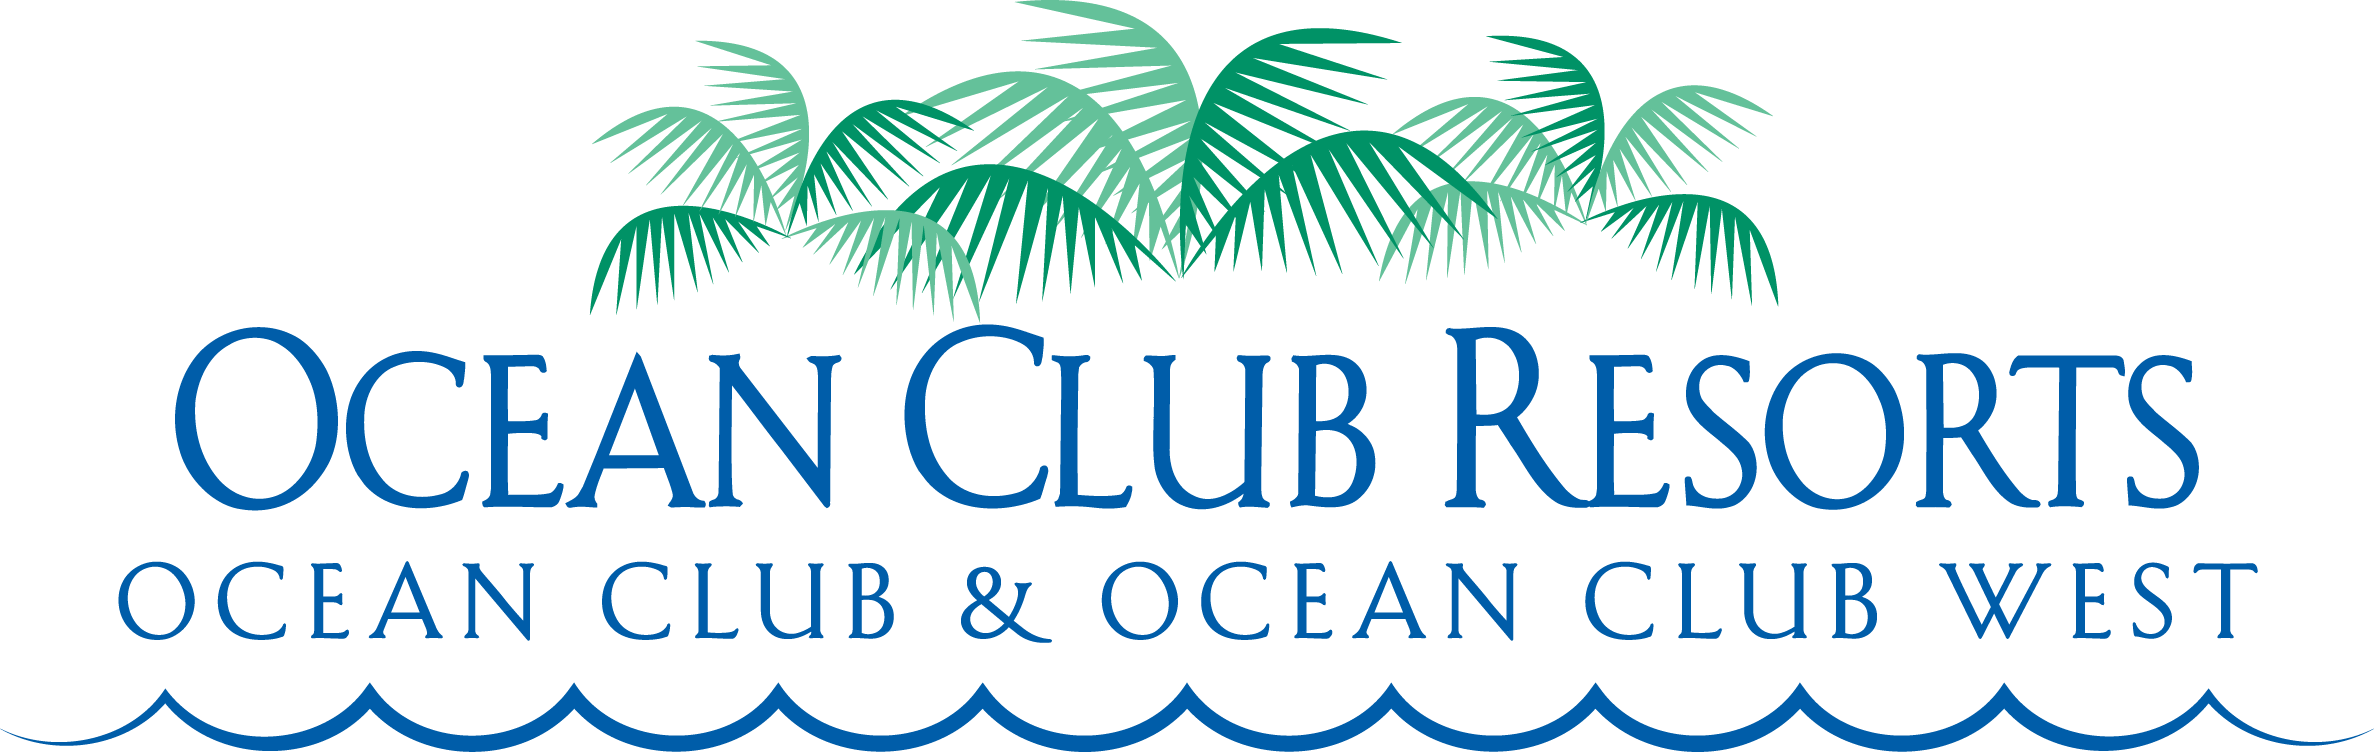 Ocean Club Resorts